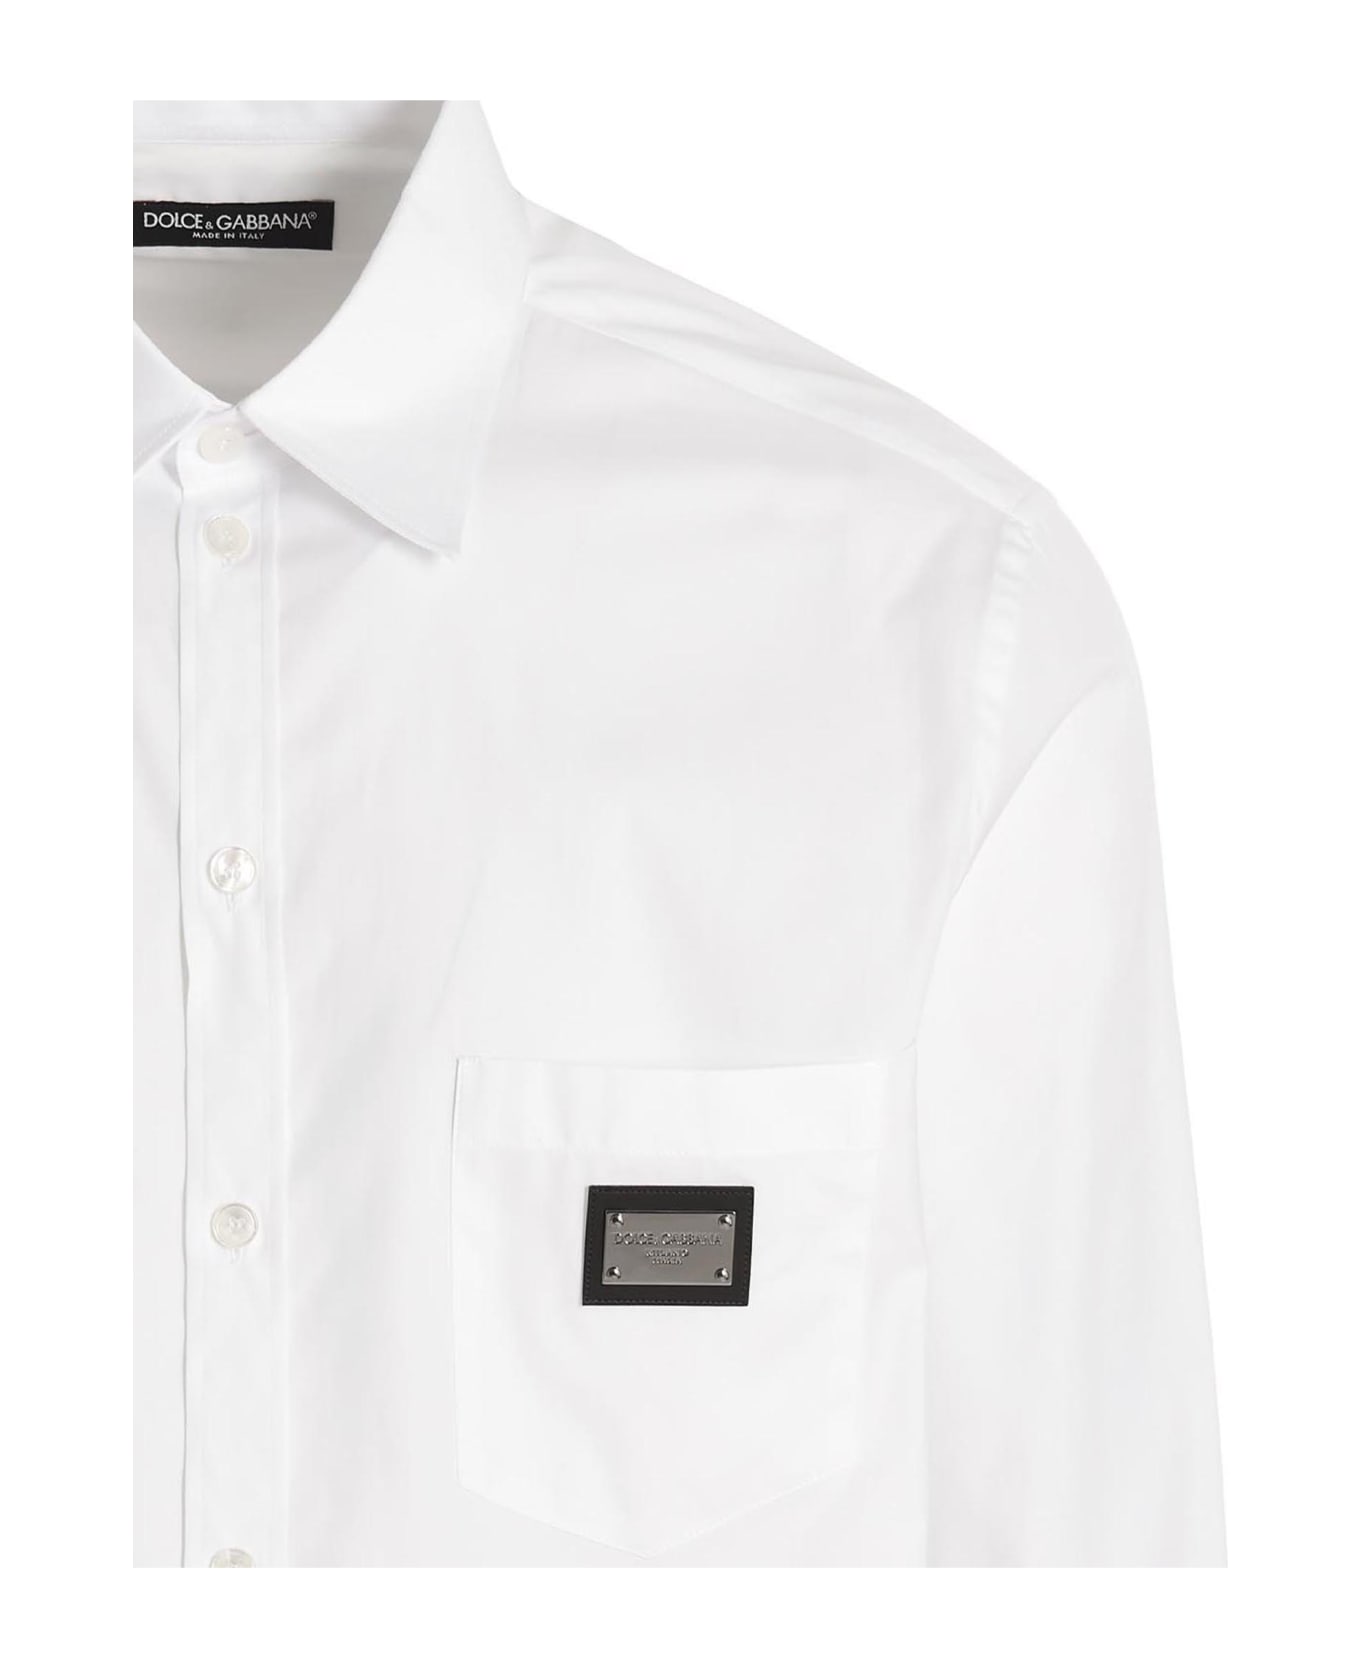 Dolce & Gabbana 'dg Essential' Shirt - White